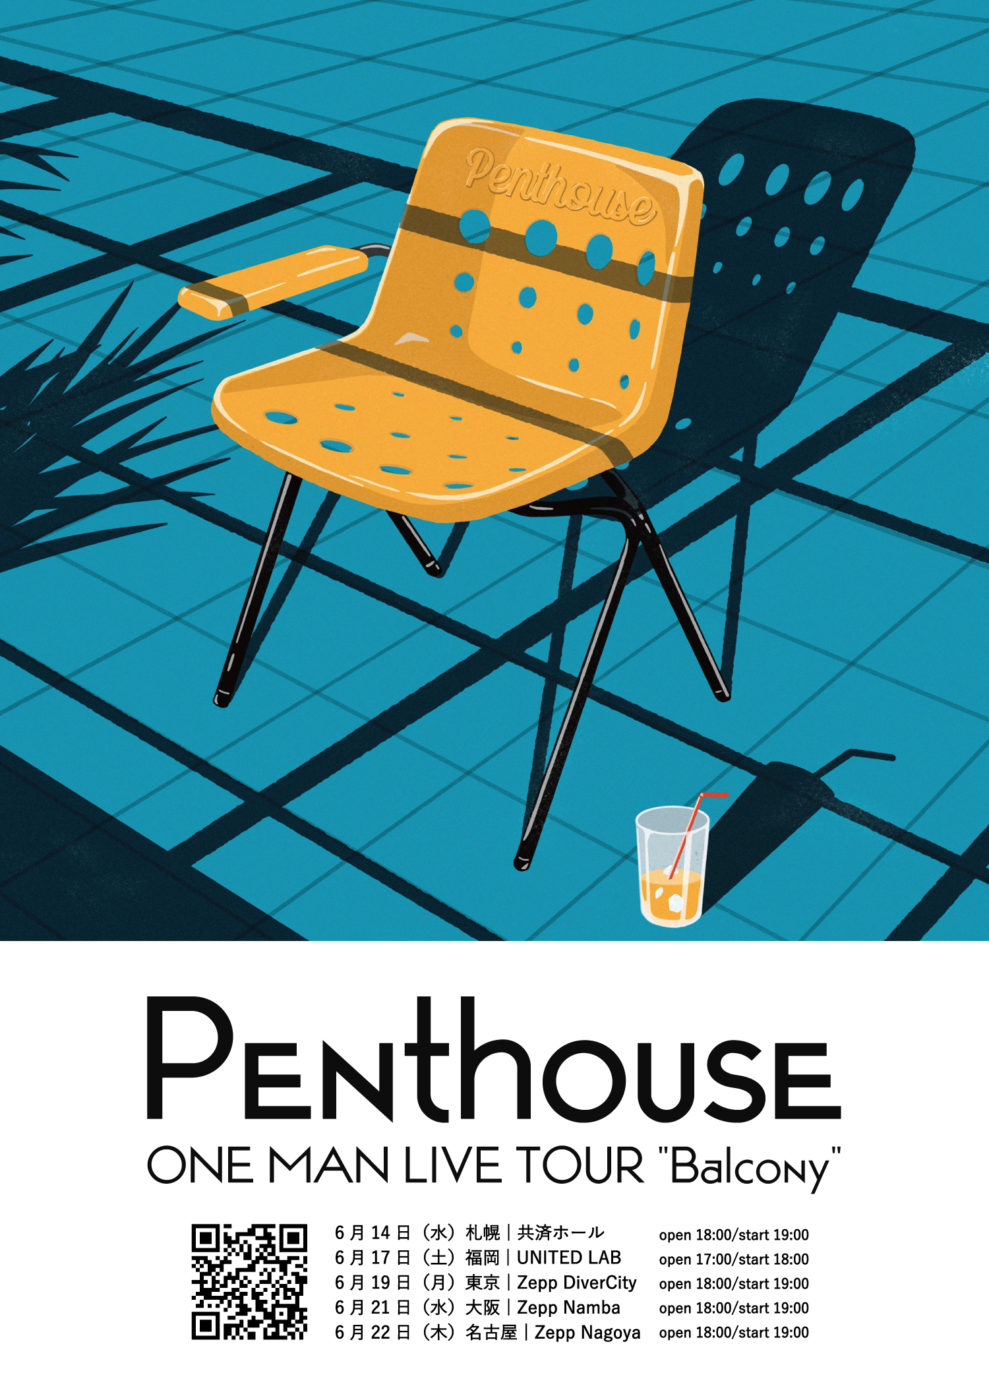 6月21日(水) Penthouse ONE MAN LIVE TOUR “Balcony” 大阪・Zepp Namba